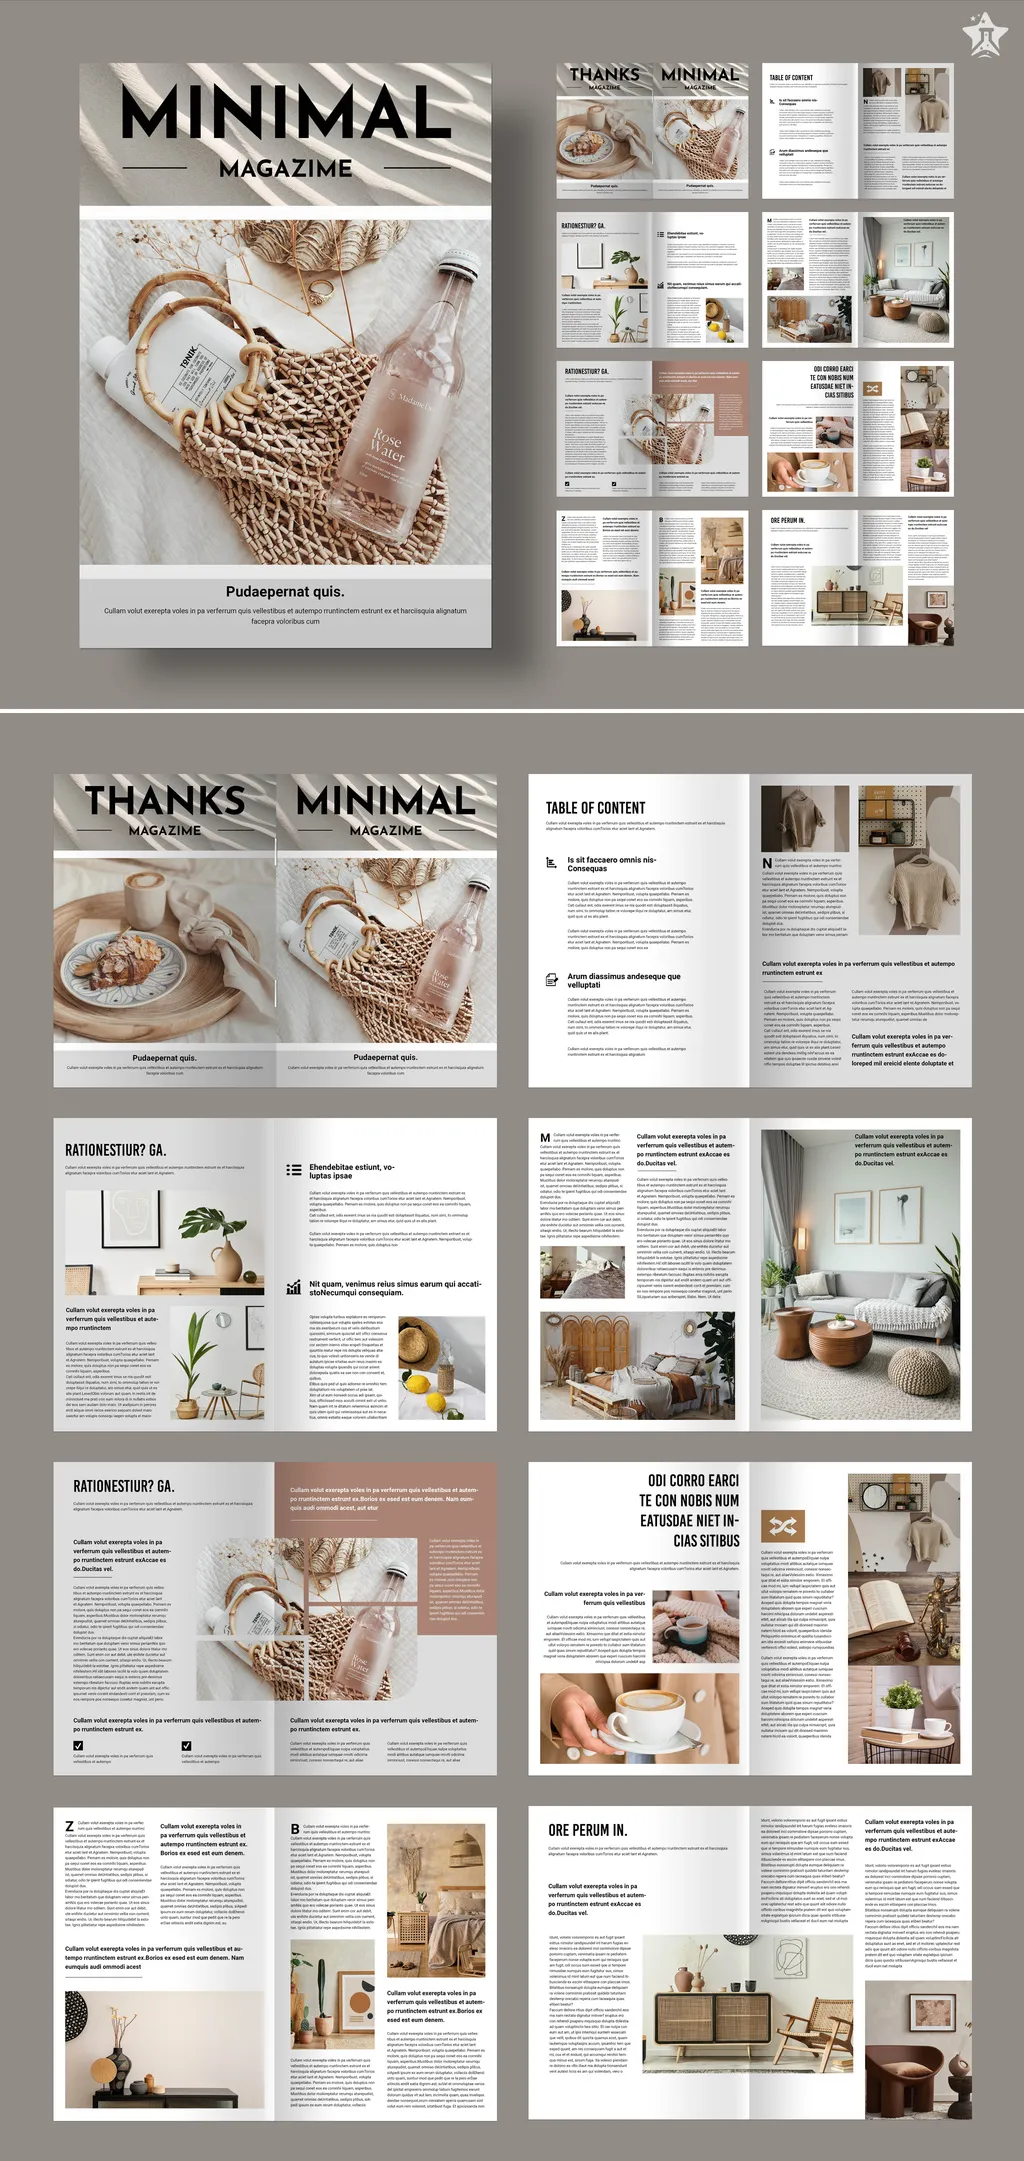 Adobestock - Minimal Magazine 714743583